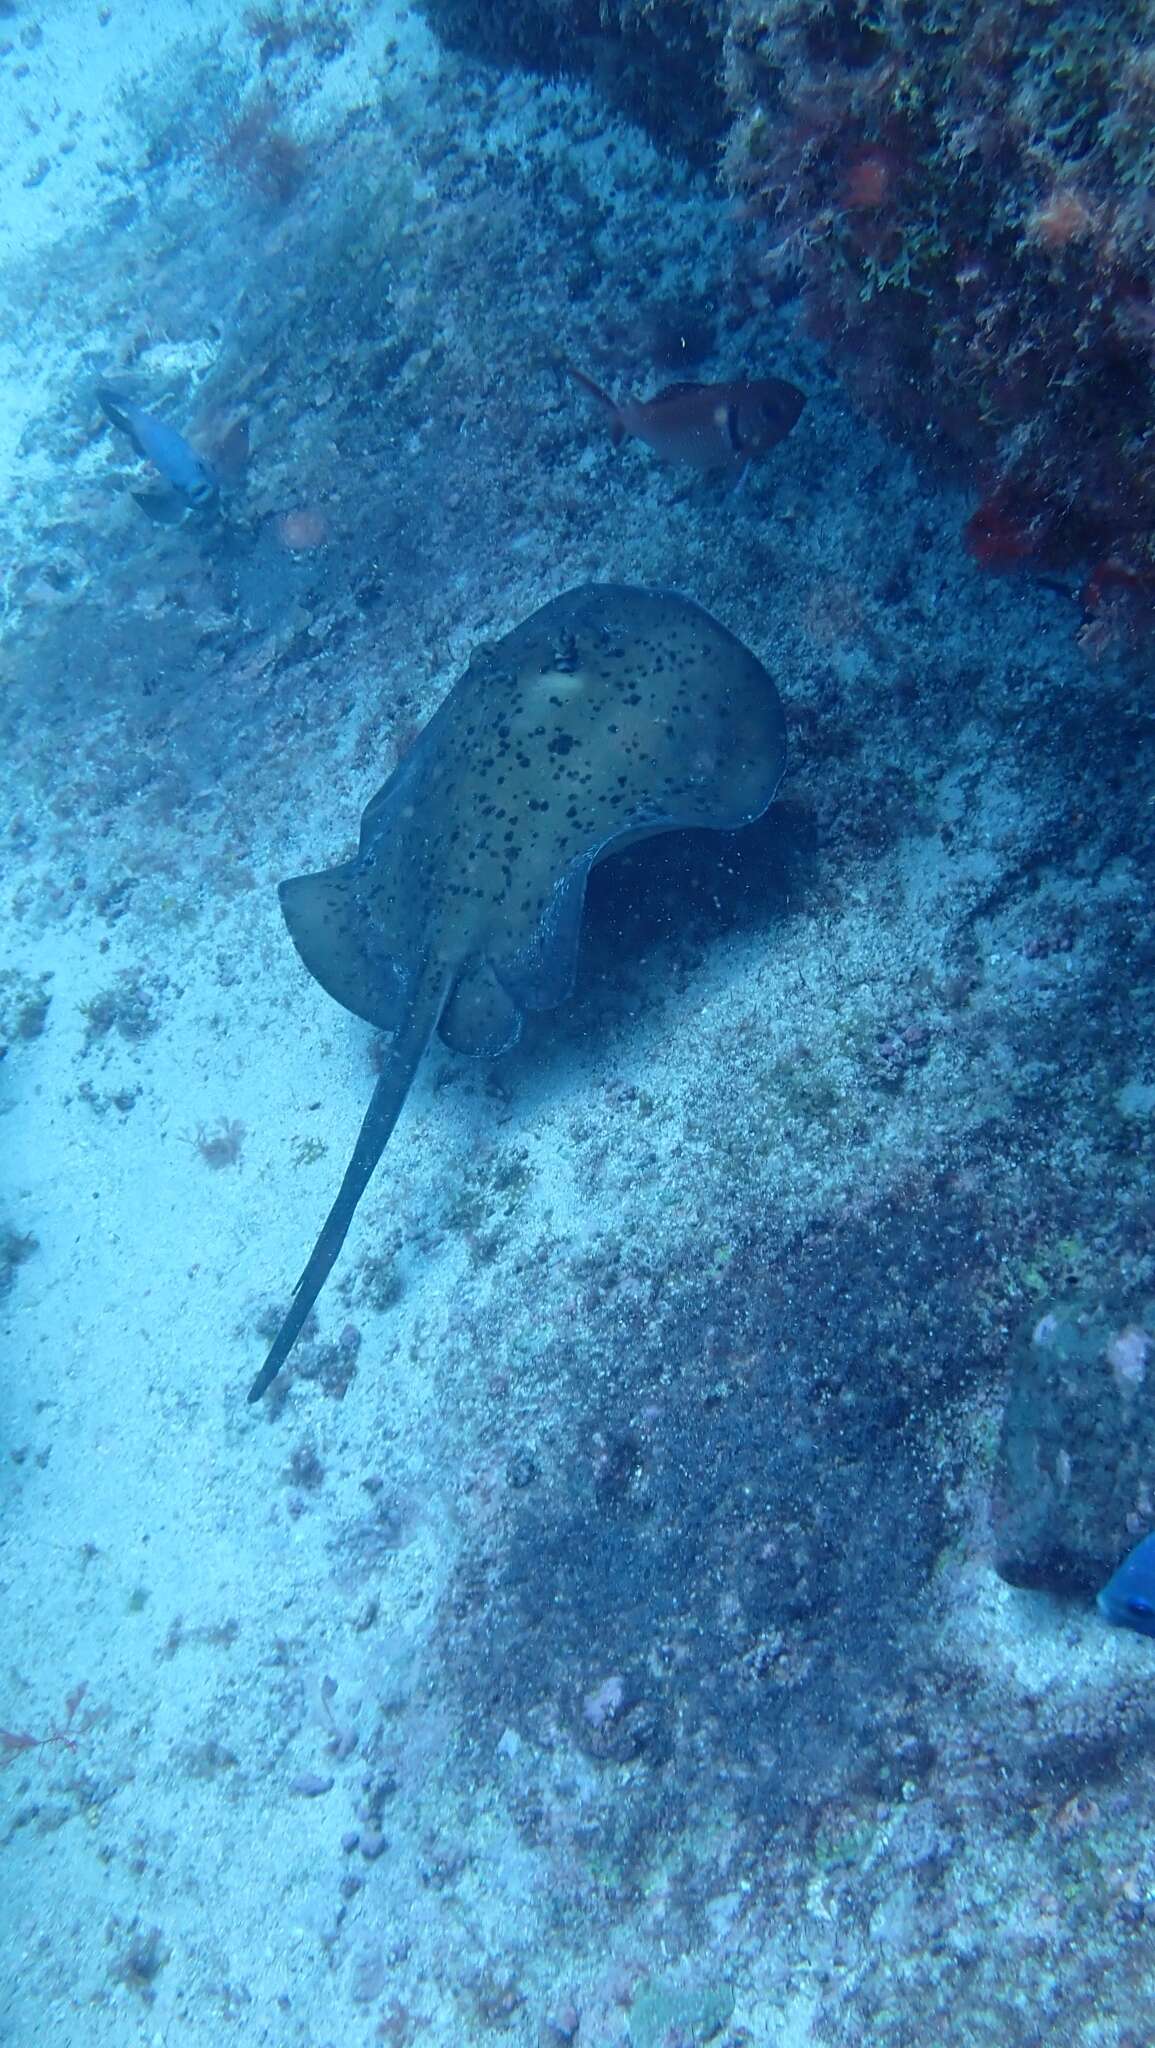 Image of round fantail stingray